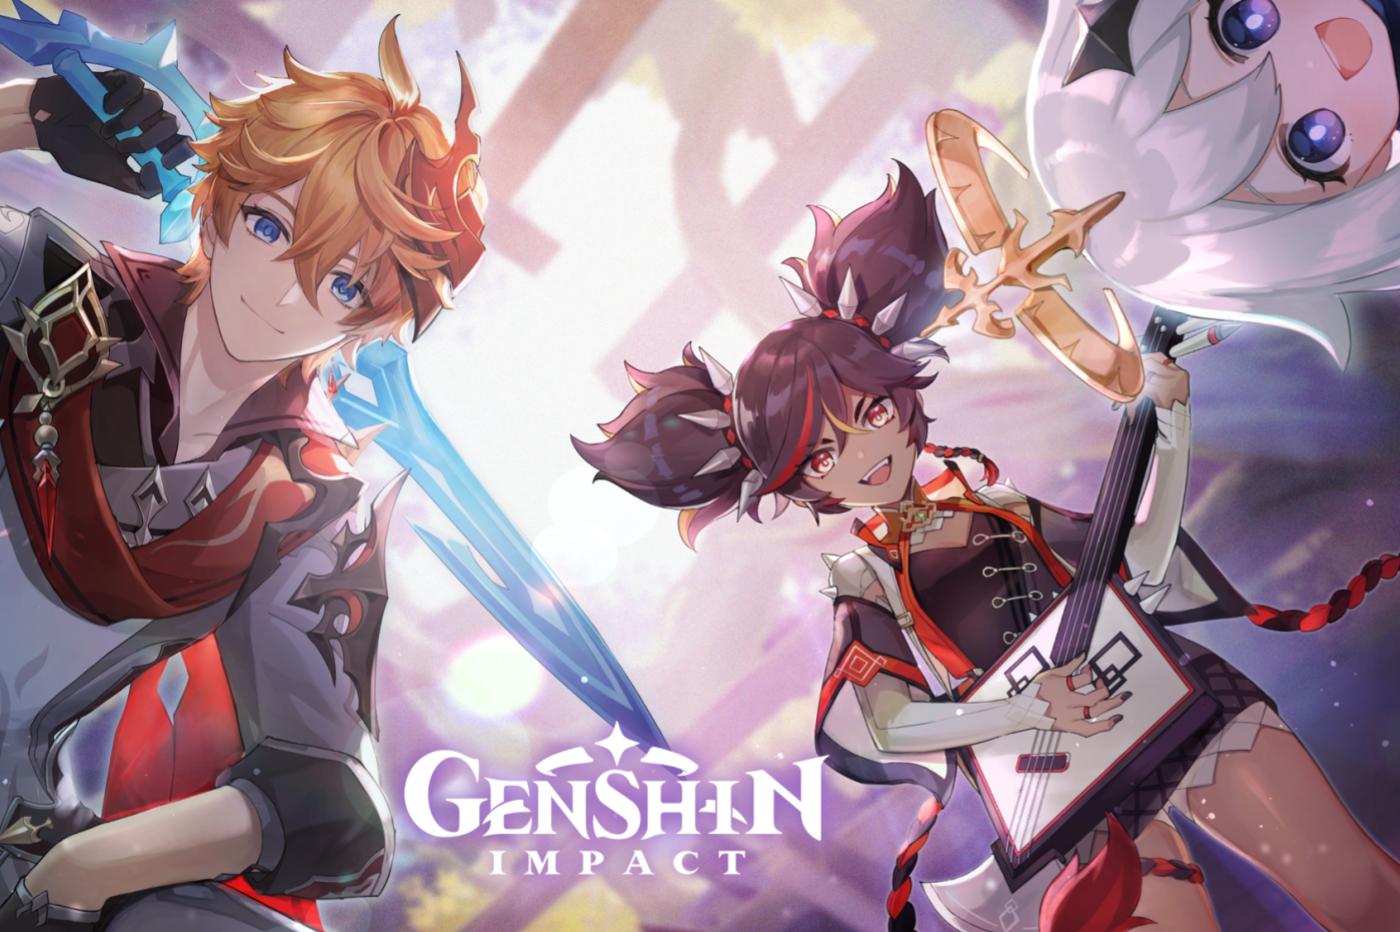 Genshin impact 2.2